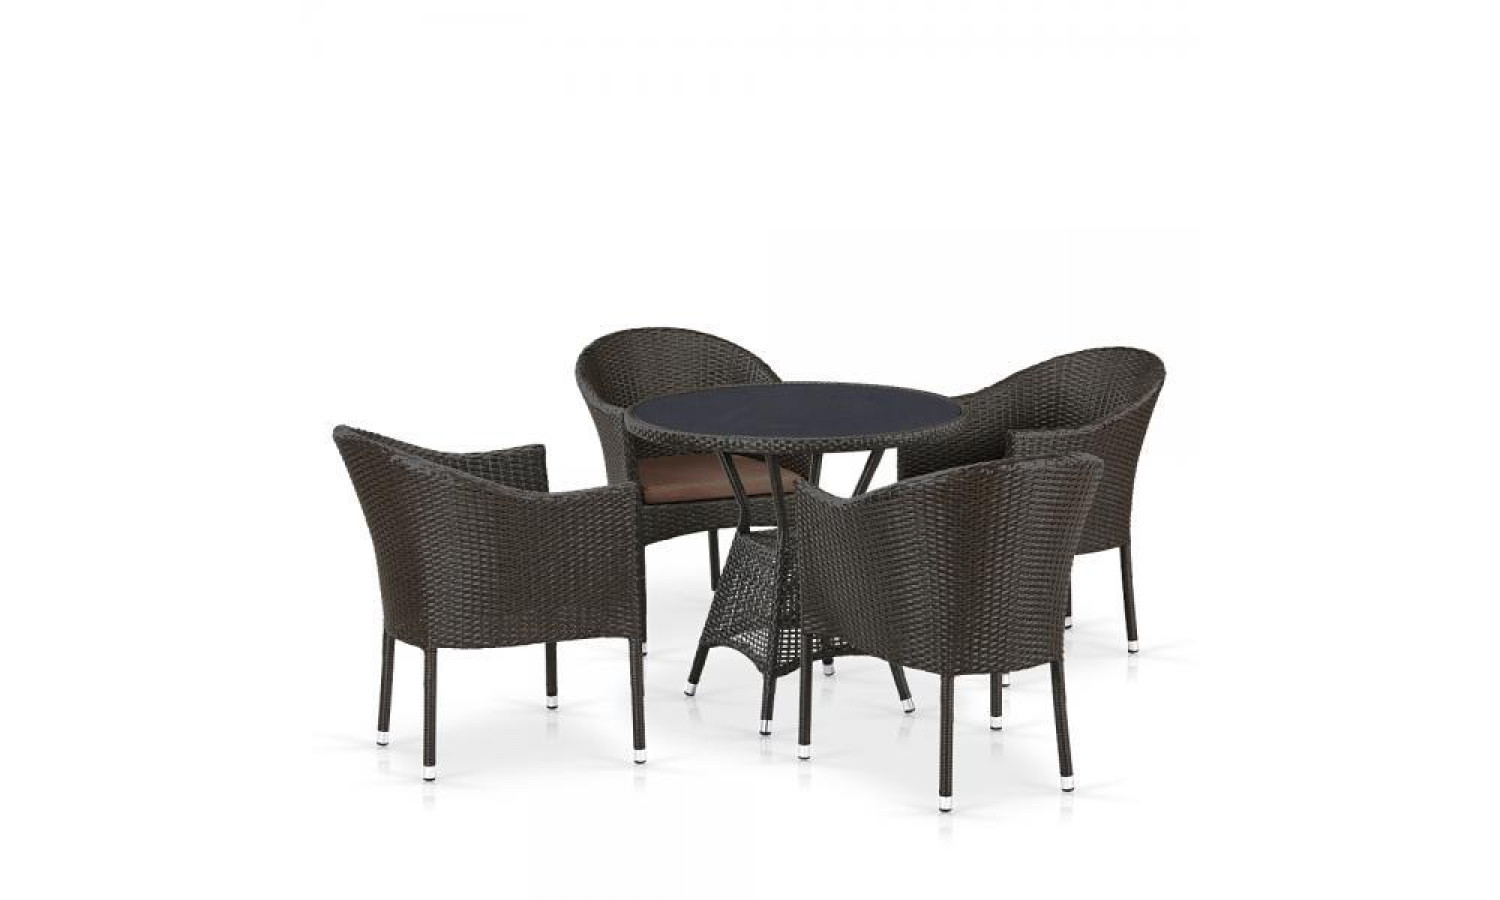 Комплект плетеной мебели T707ANS/Y350-W53 4Pcs Brown